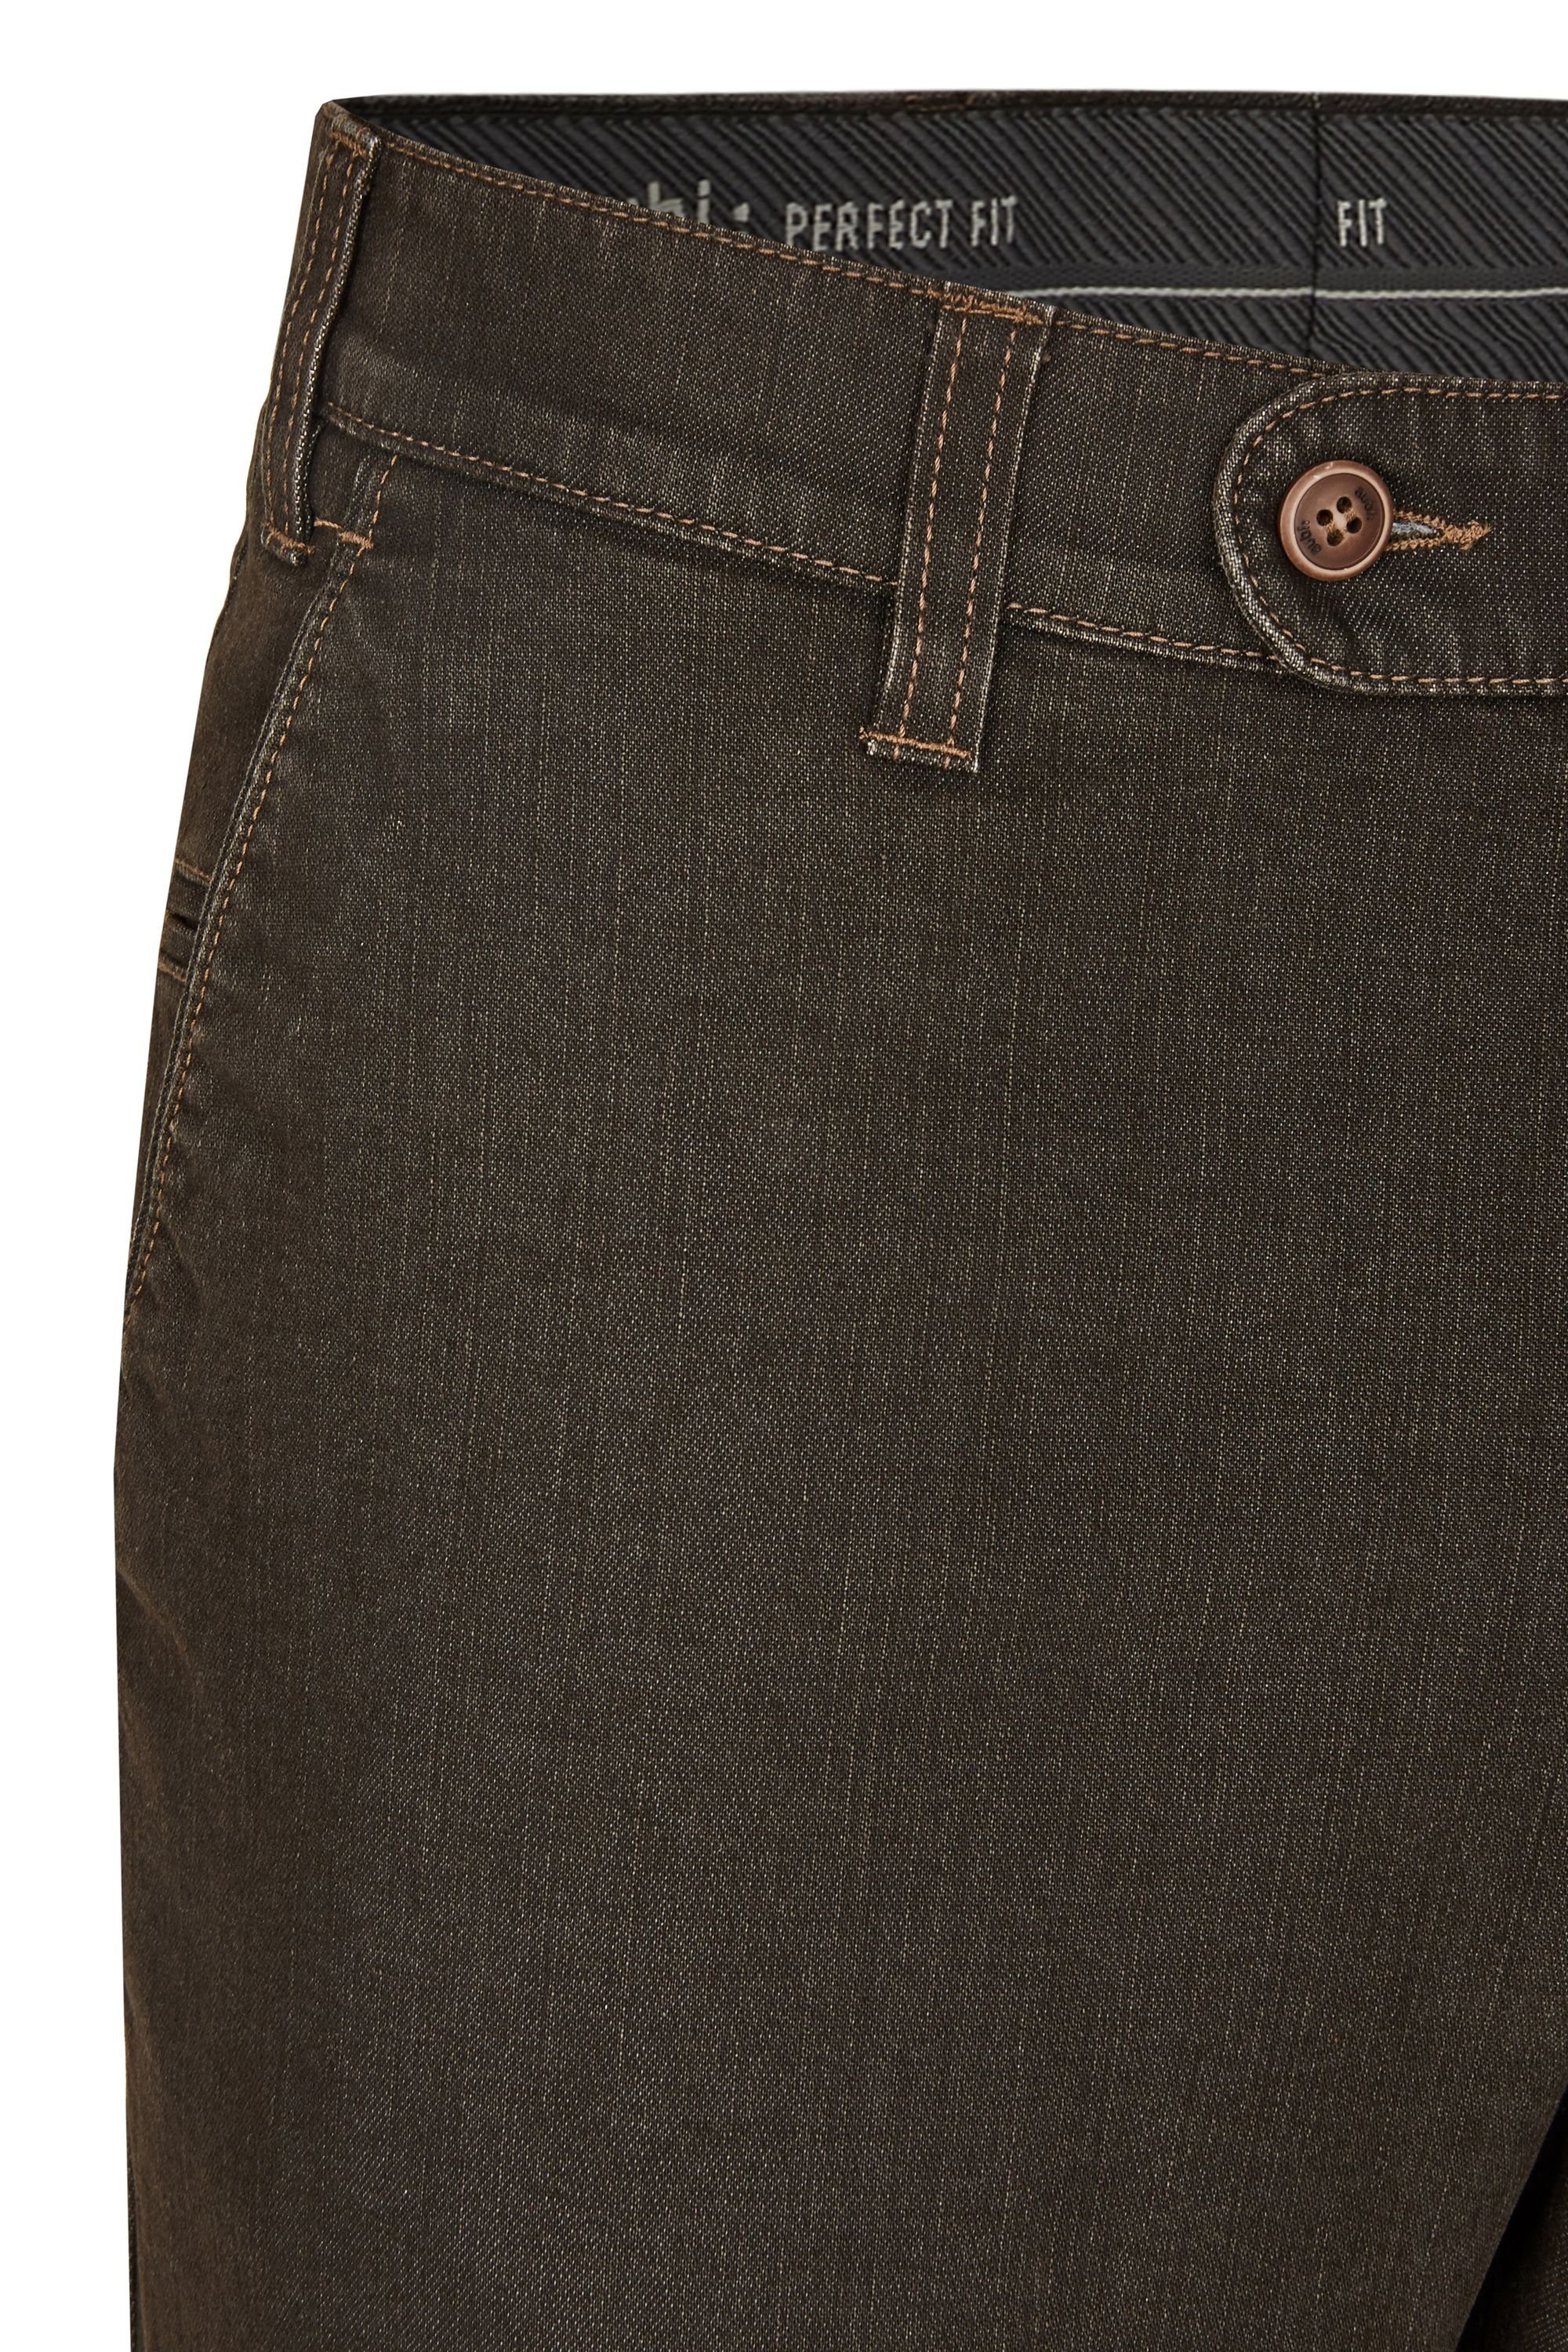 Modell Herren 926 Thermo braun Fit Perfect Hose Winter aubi Stretch Jeans Bequeme Jeans (28) aubi: